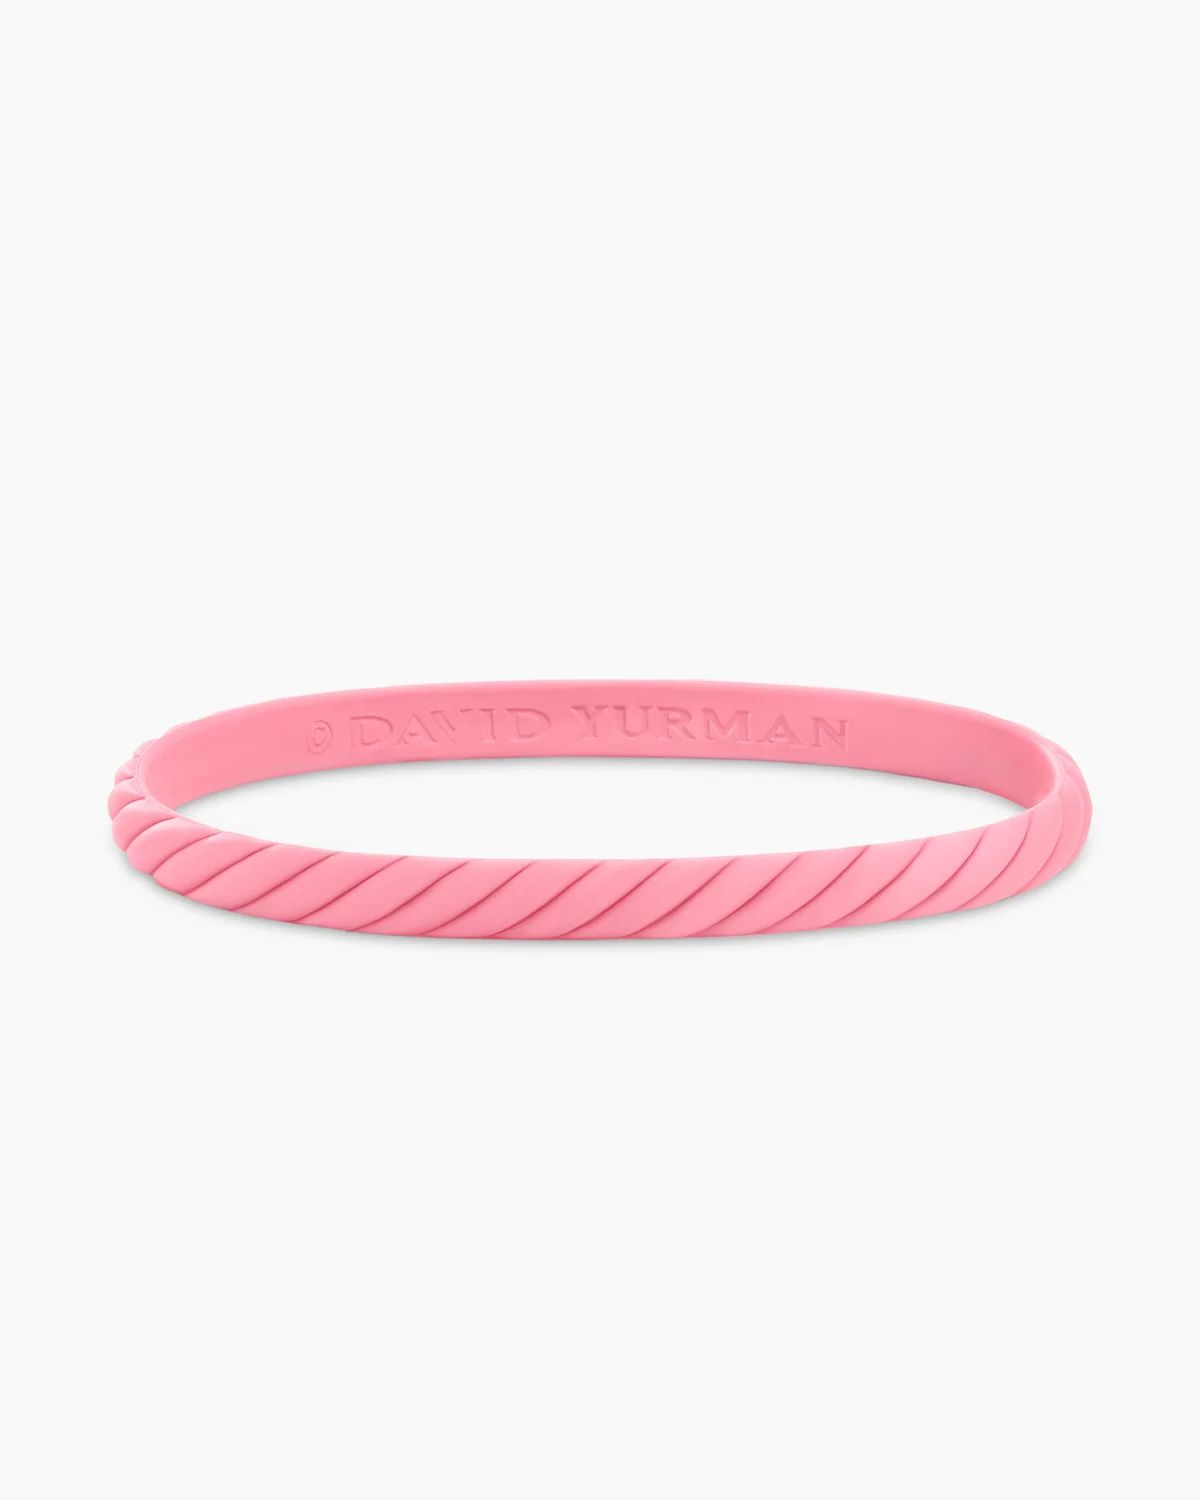 David Yurman | Cable Pink Rubber Bracelet, 6mm | David Yurman